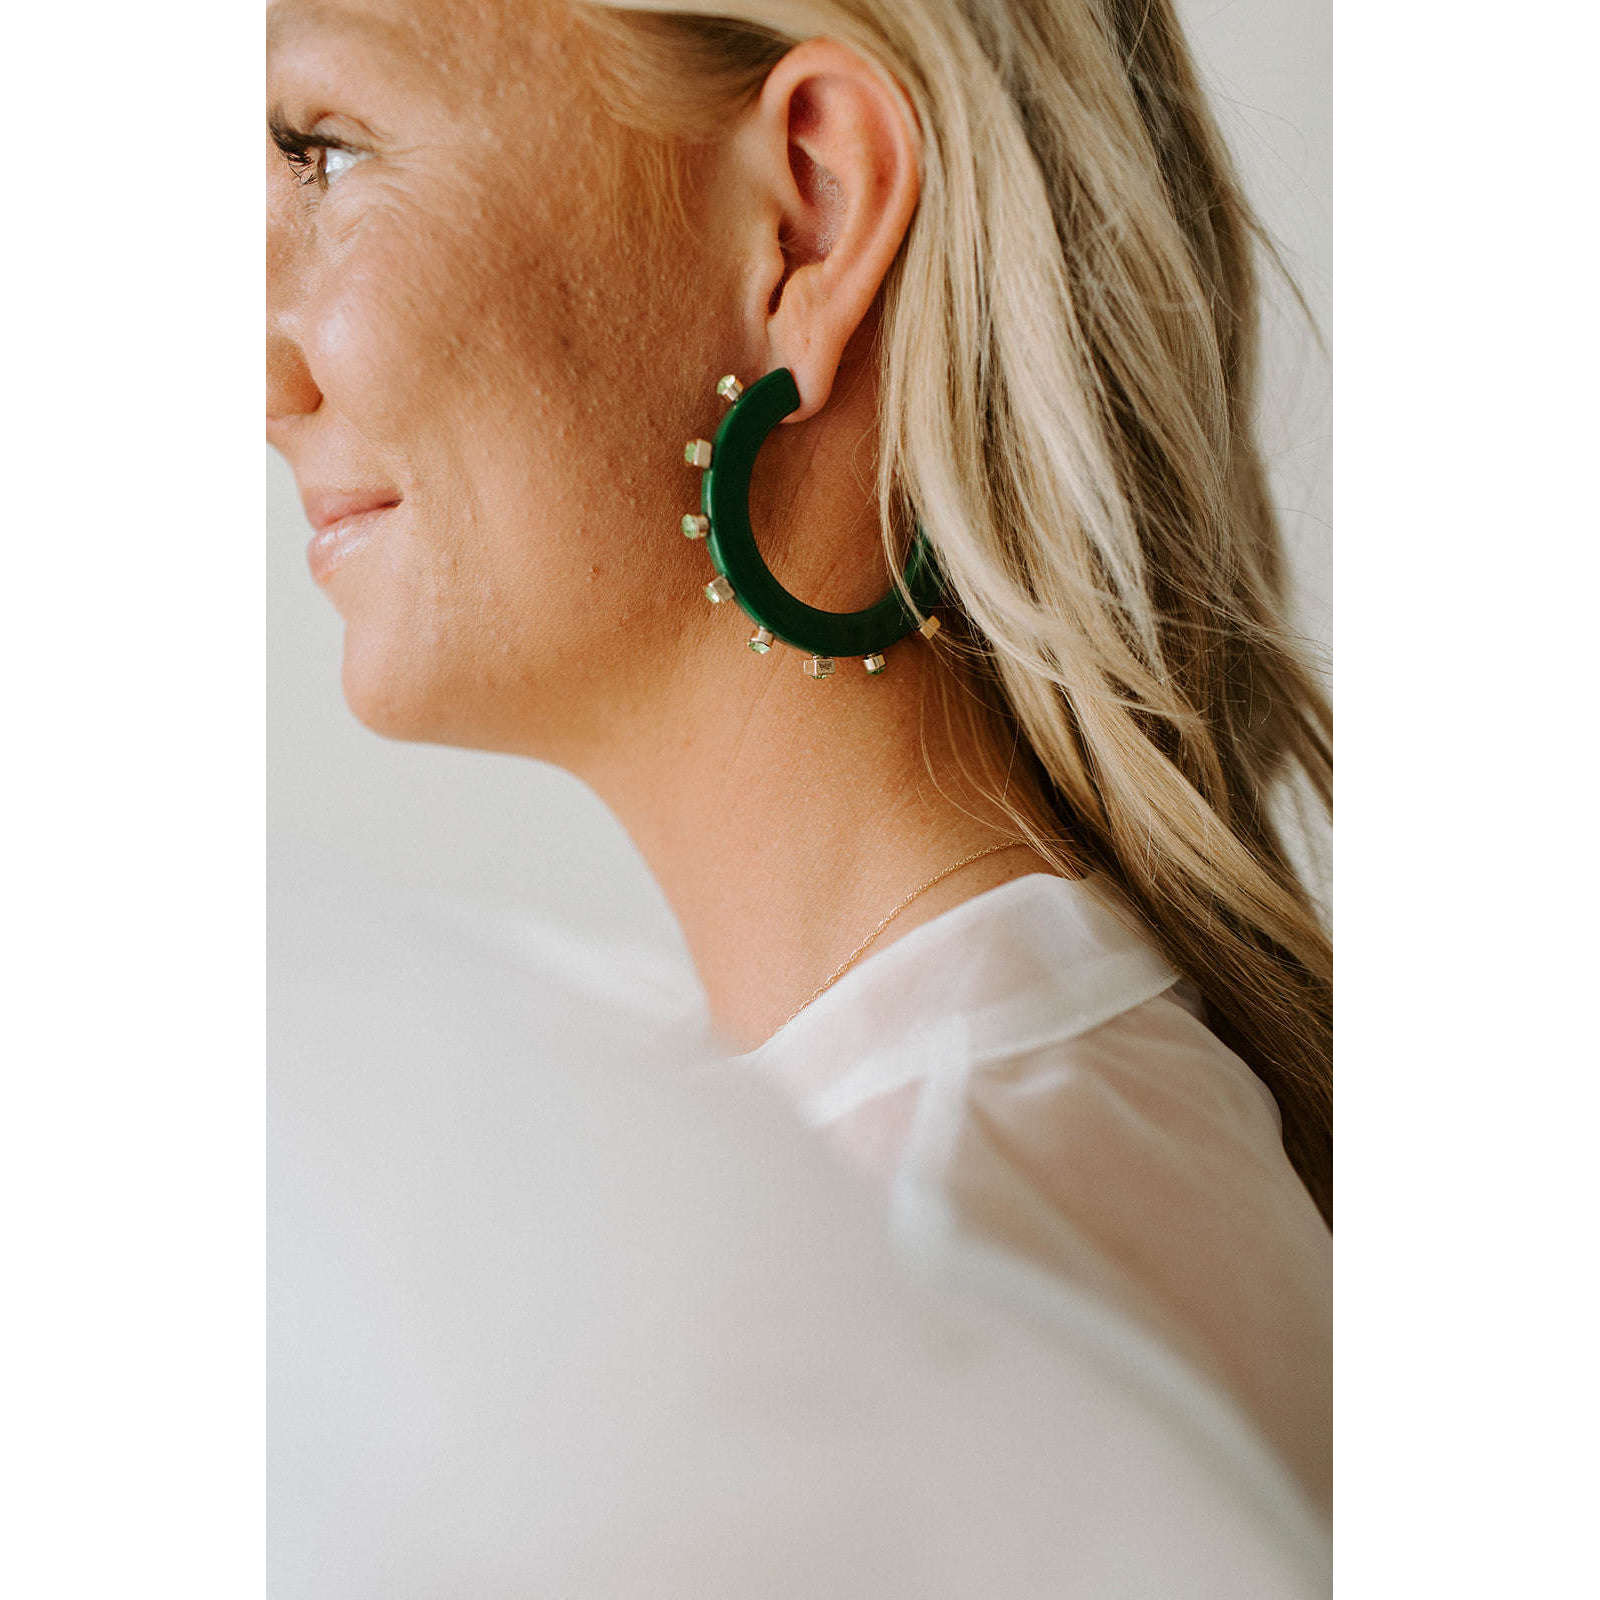 8.28 Boutique:Smith & Co. Jewel Design,Smith & Co. Jewel Design Large City Girl Hoop Earrings,Earrings